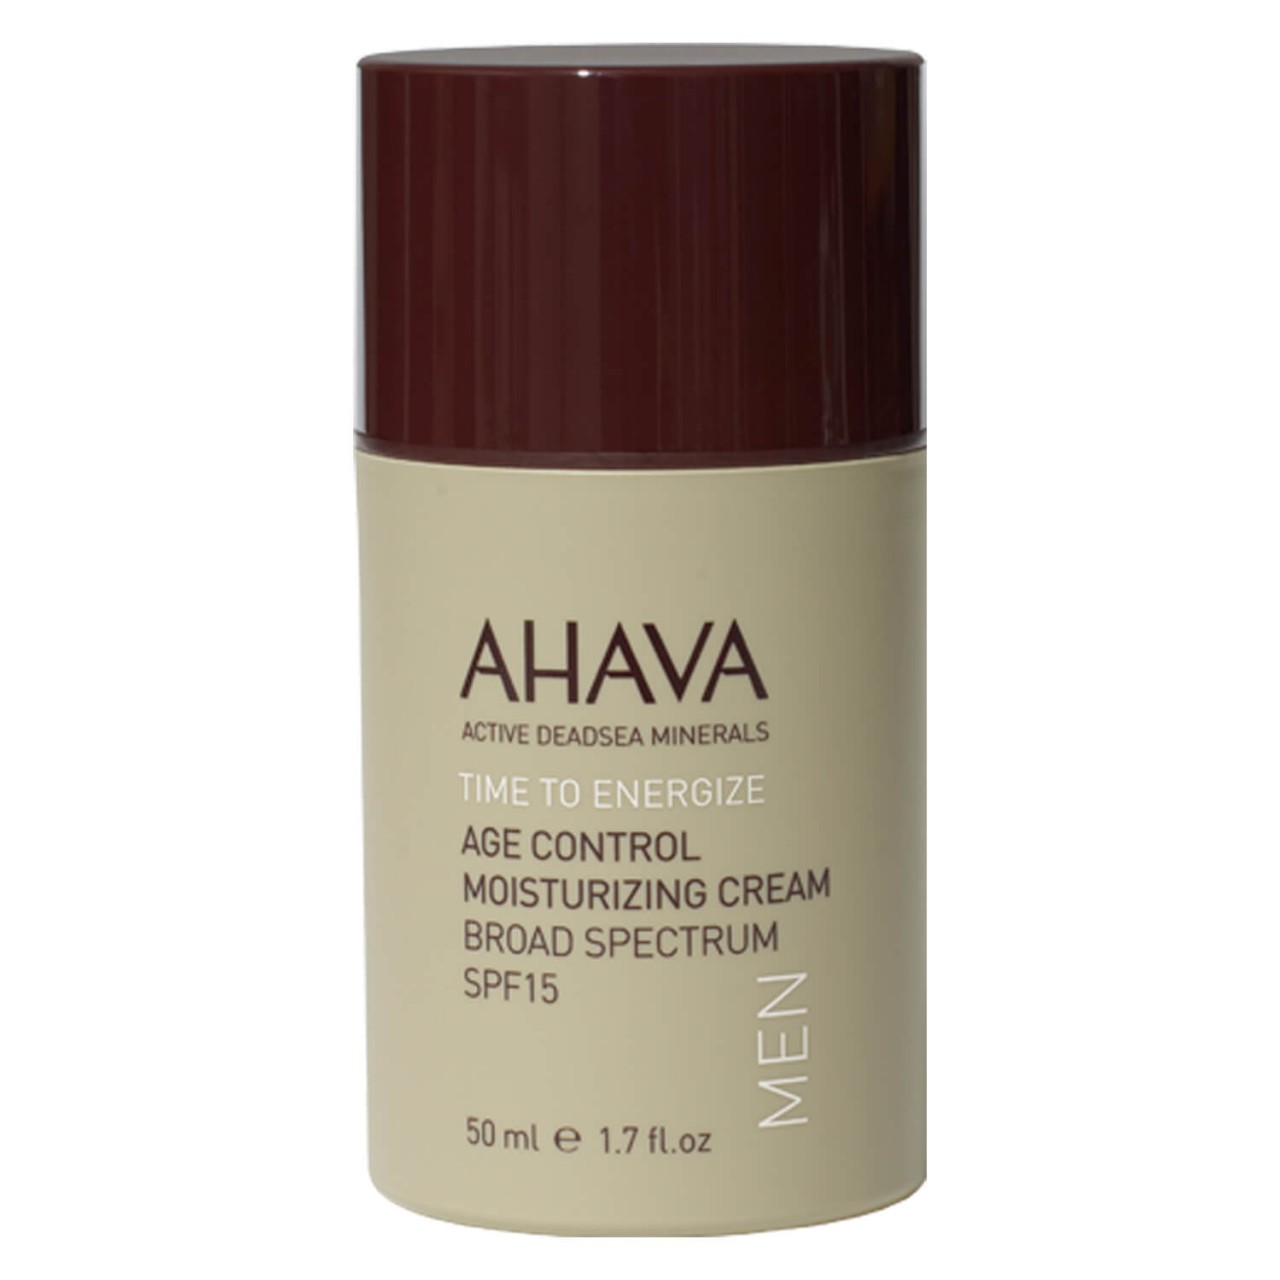 Time To Energize - Age Control Moisturizing Cream SPF15 von Ahava